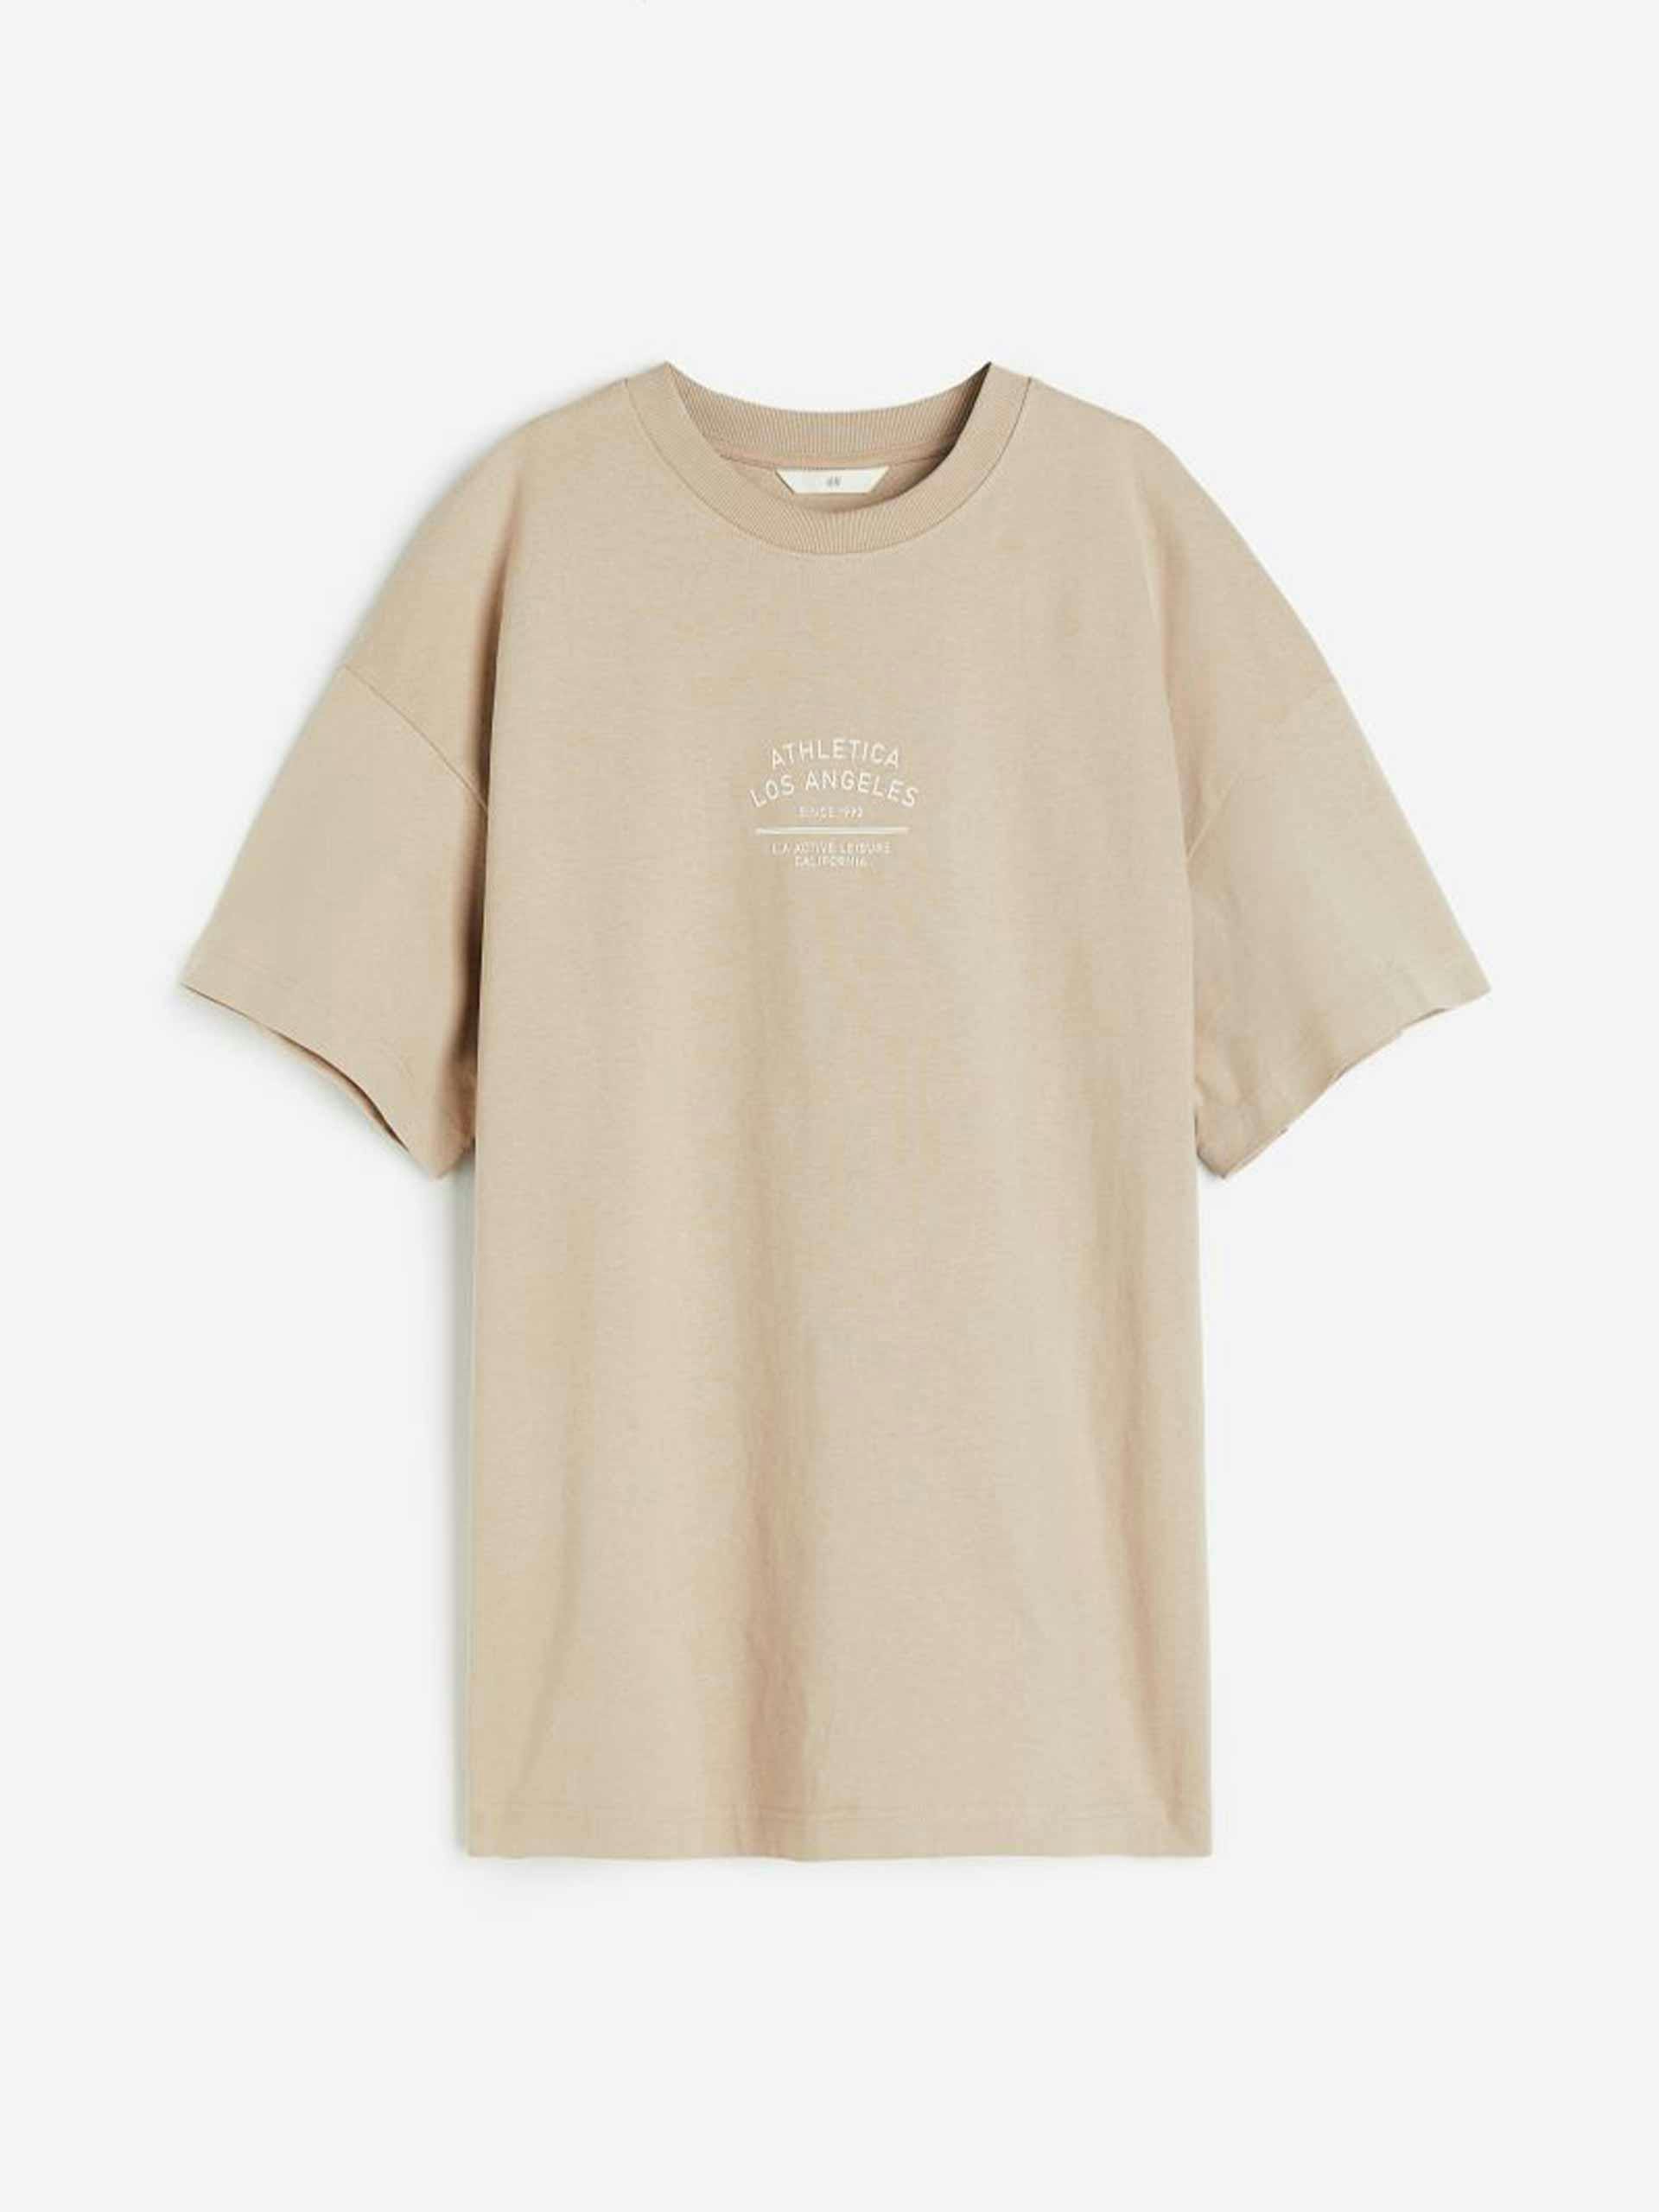 Oversized beige t-shirt